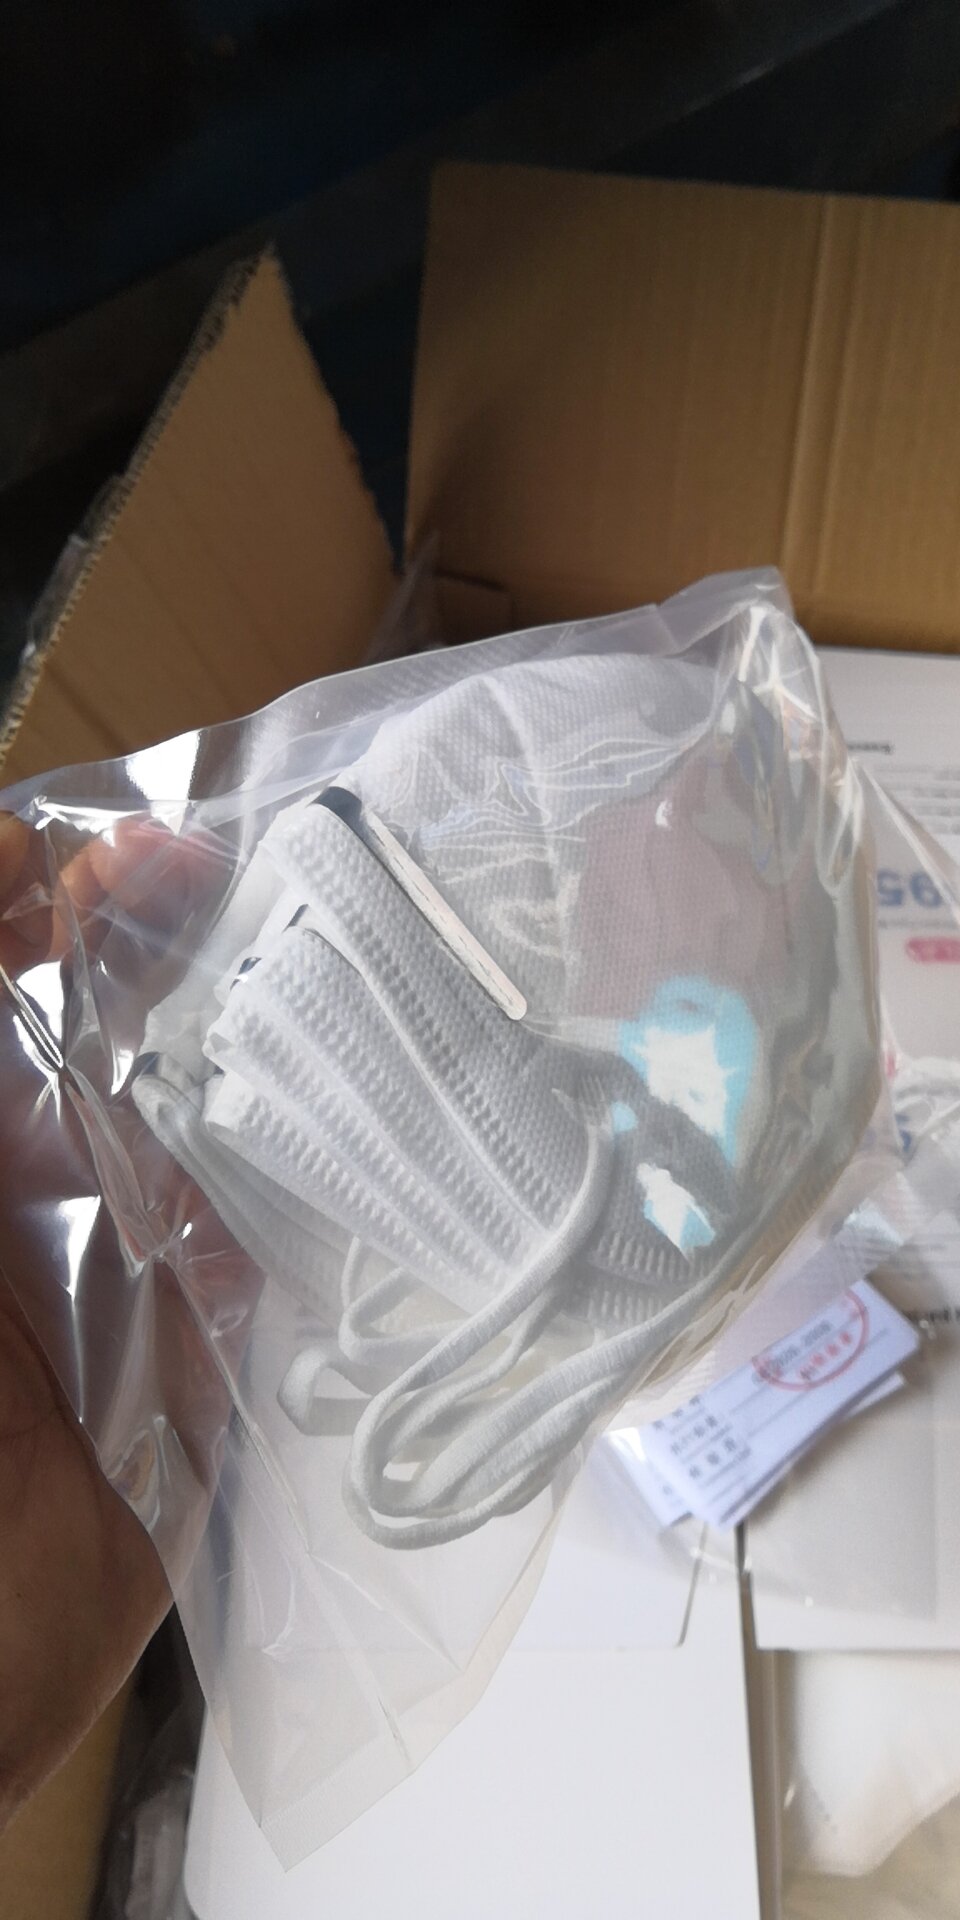 KN95 Respirator Masks Packed 📦